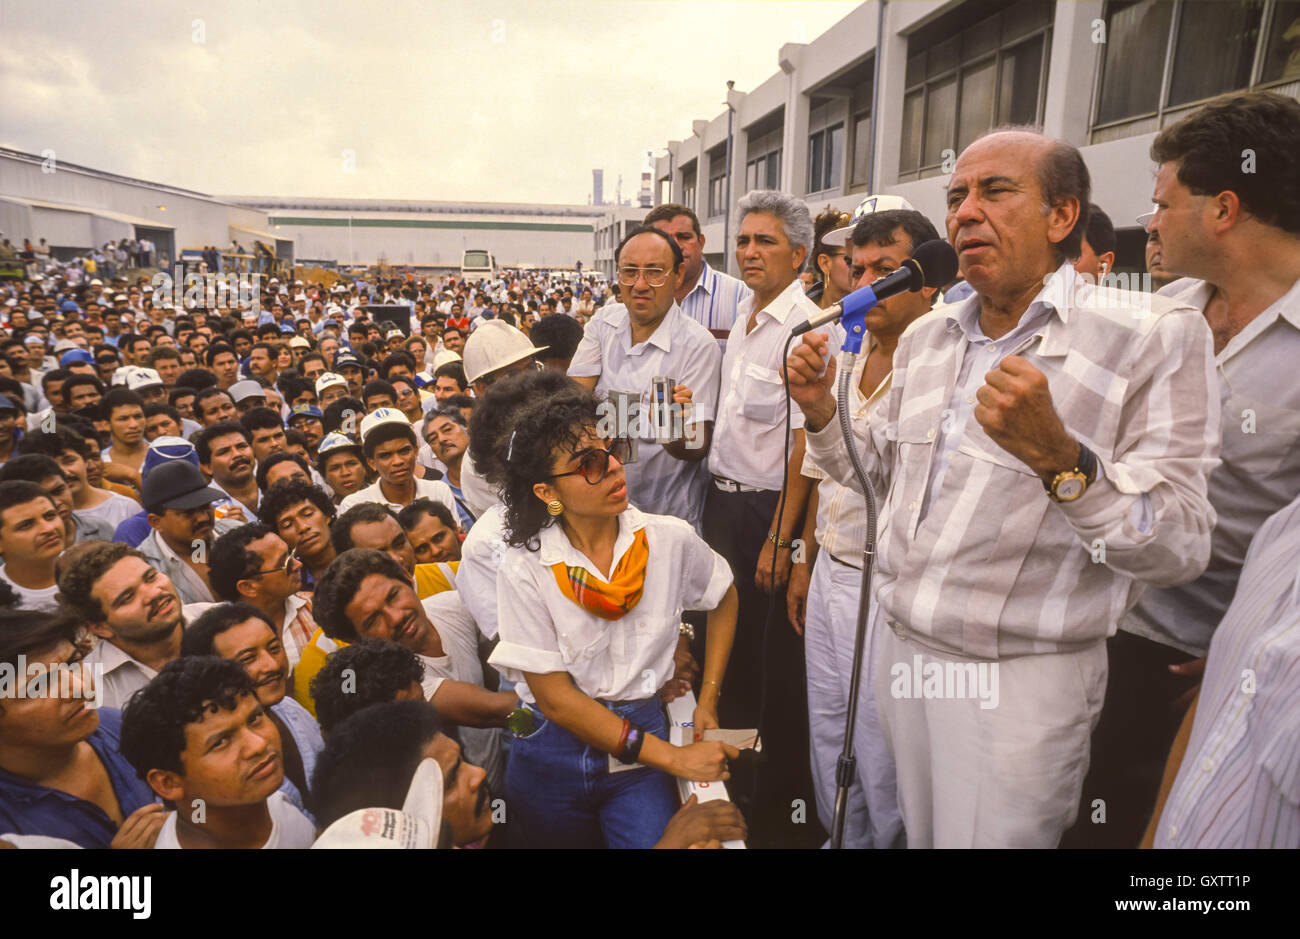 CIUDAD GUAYANA, VENEZUELA - Presidential candidate Carlos Andres Perez campaigning at Venalum plant, aluminum factory. October 1988 Stock Photo